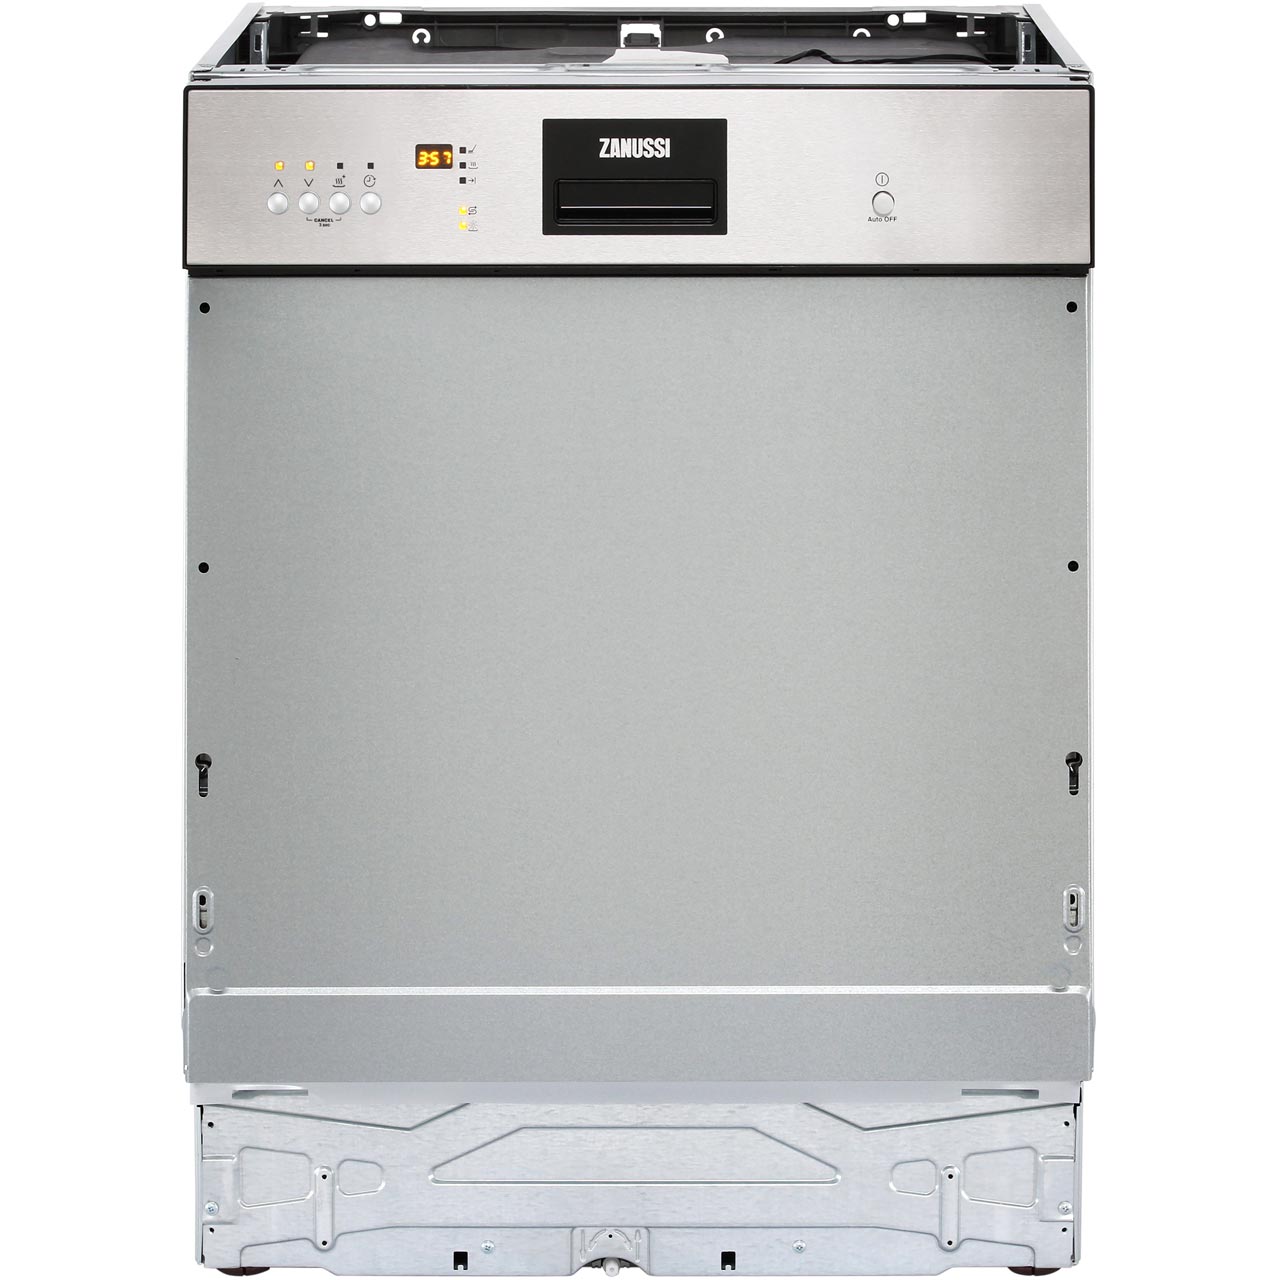 Best Semi Integrated dishwasher 2020